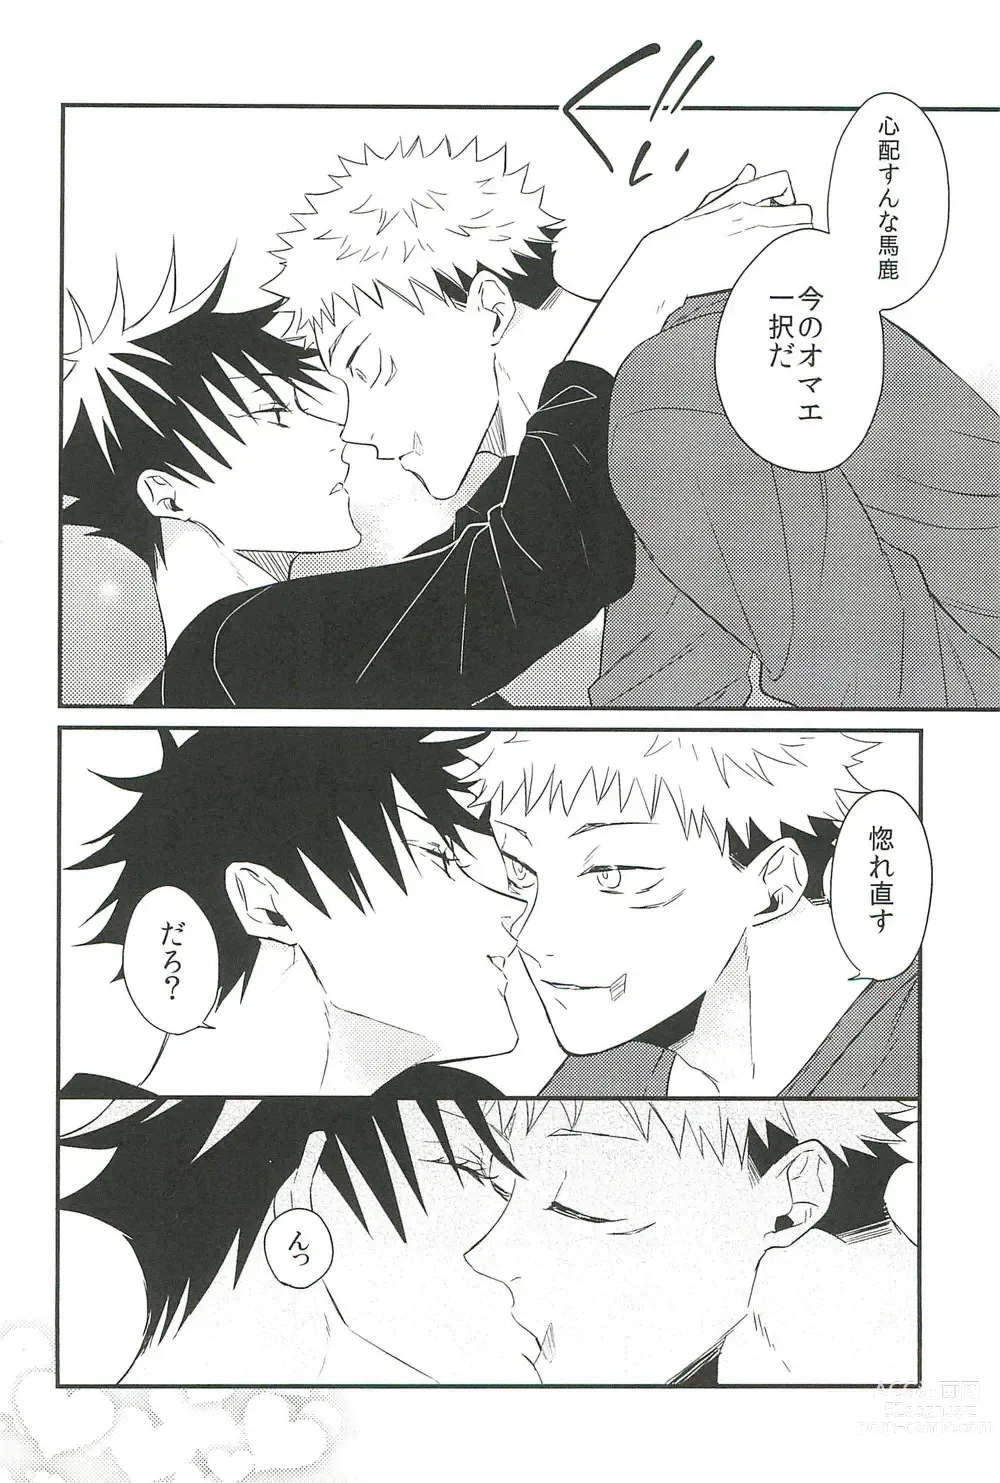 Page 56 of doujinshi 10+